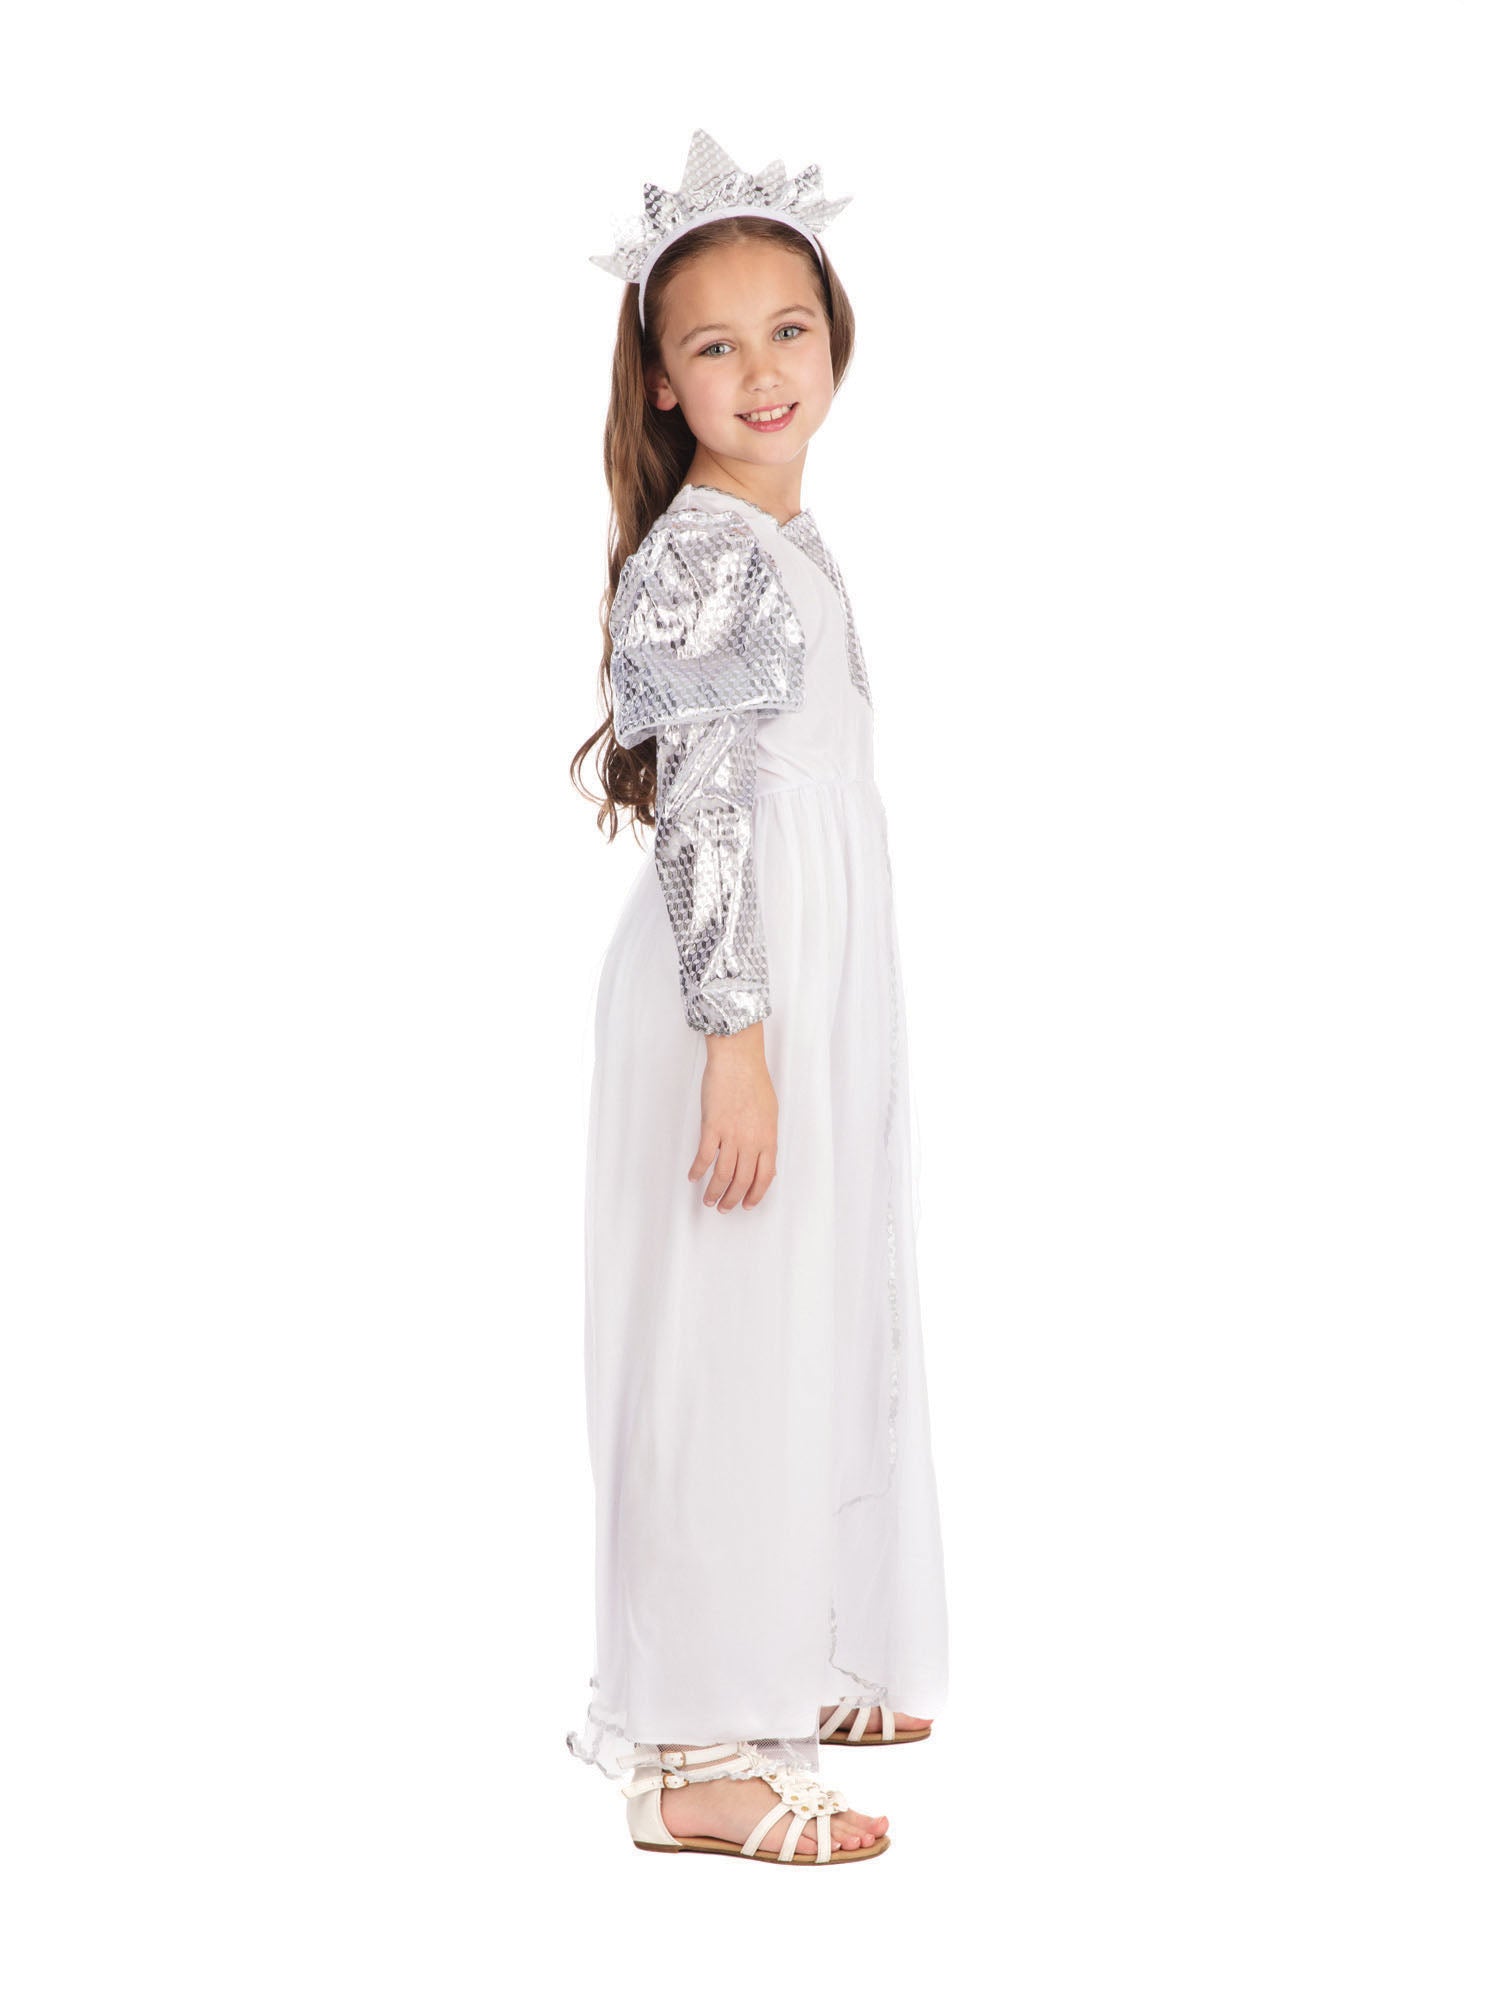 White Princess Costume